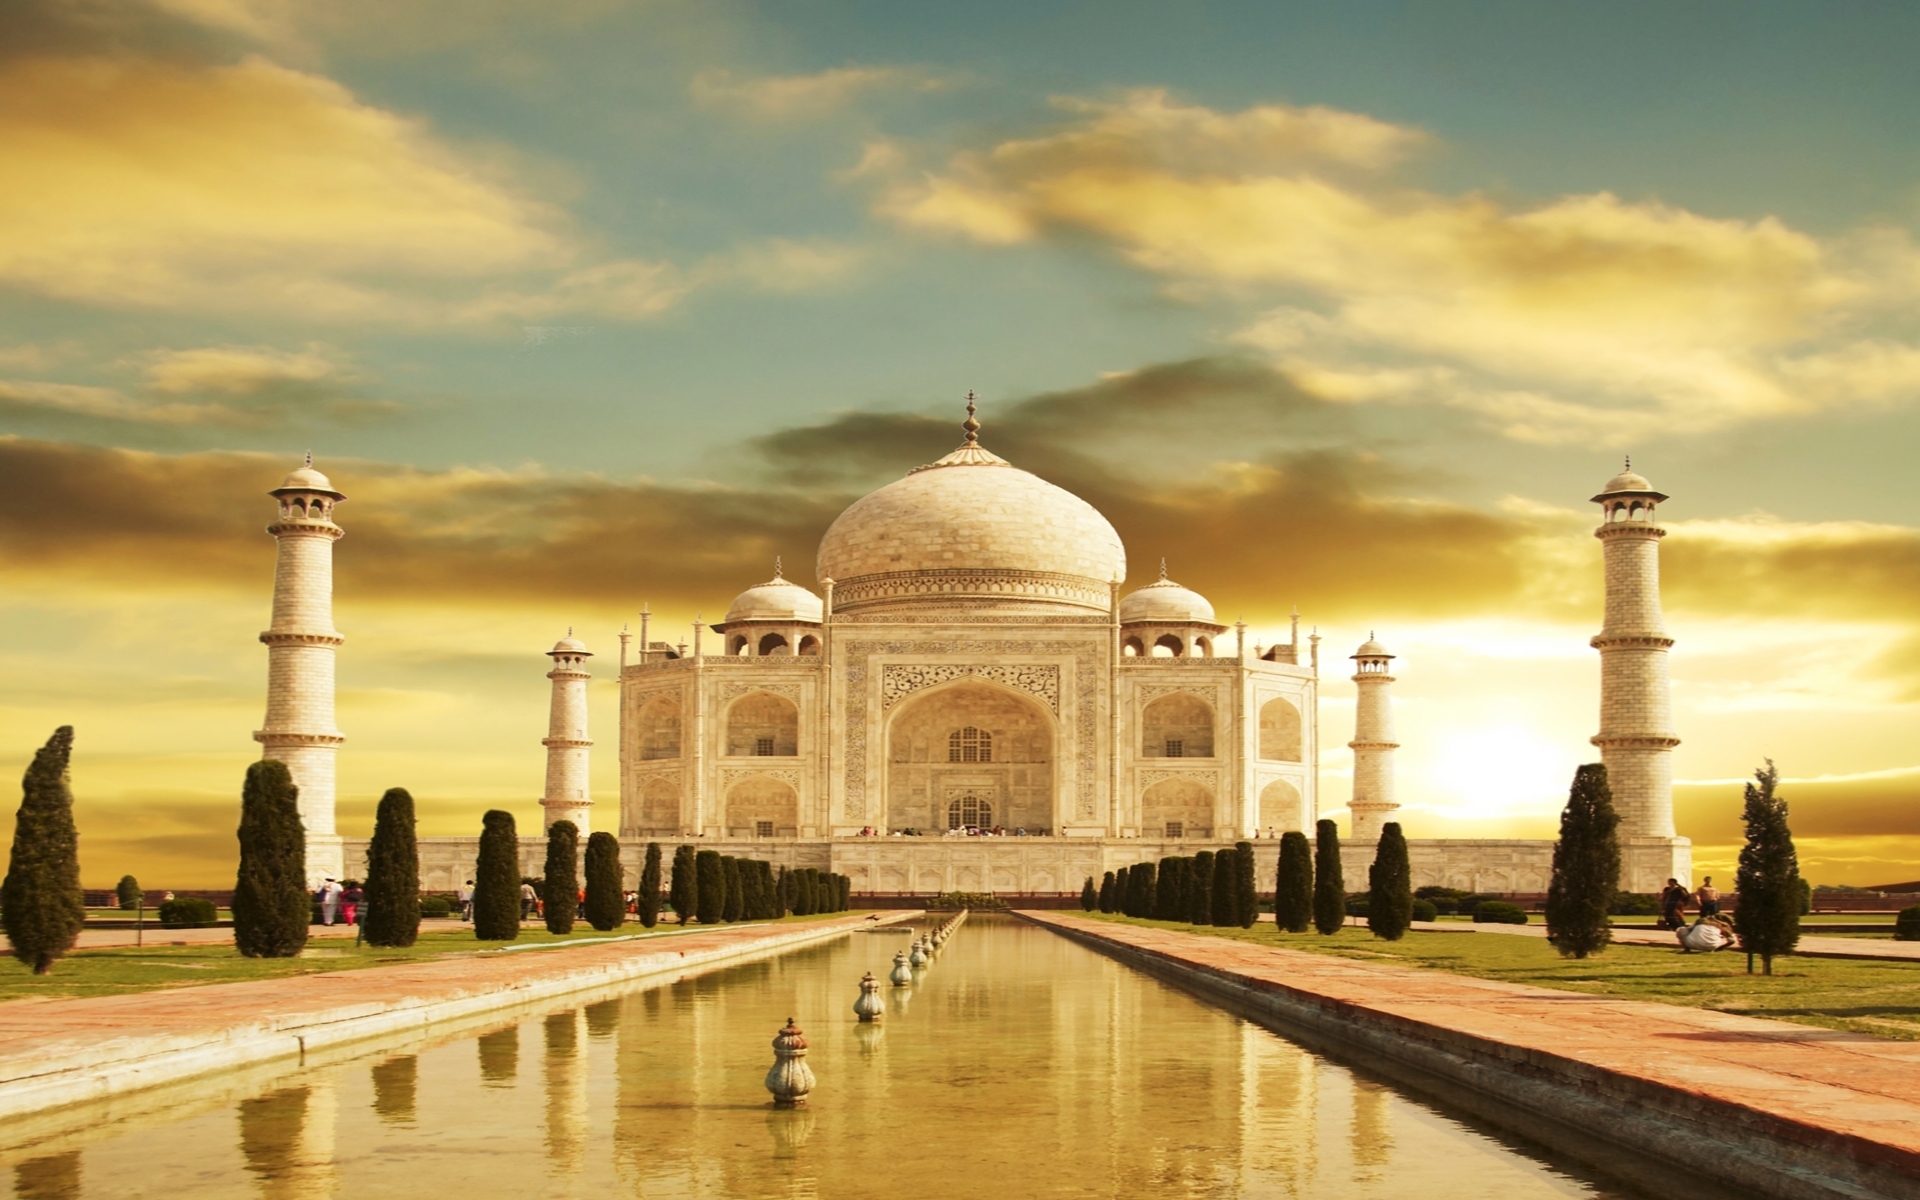 Скачать обои бесплатно Тадж Махал (Taj Mahal), Архитектура, Пейзаж картинка на рабочий стол ПК